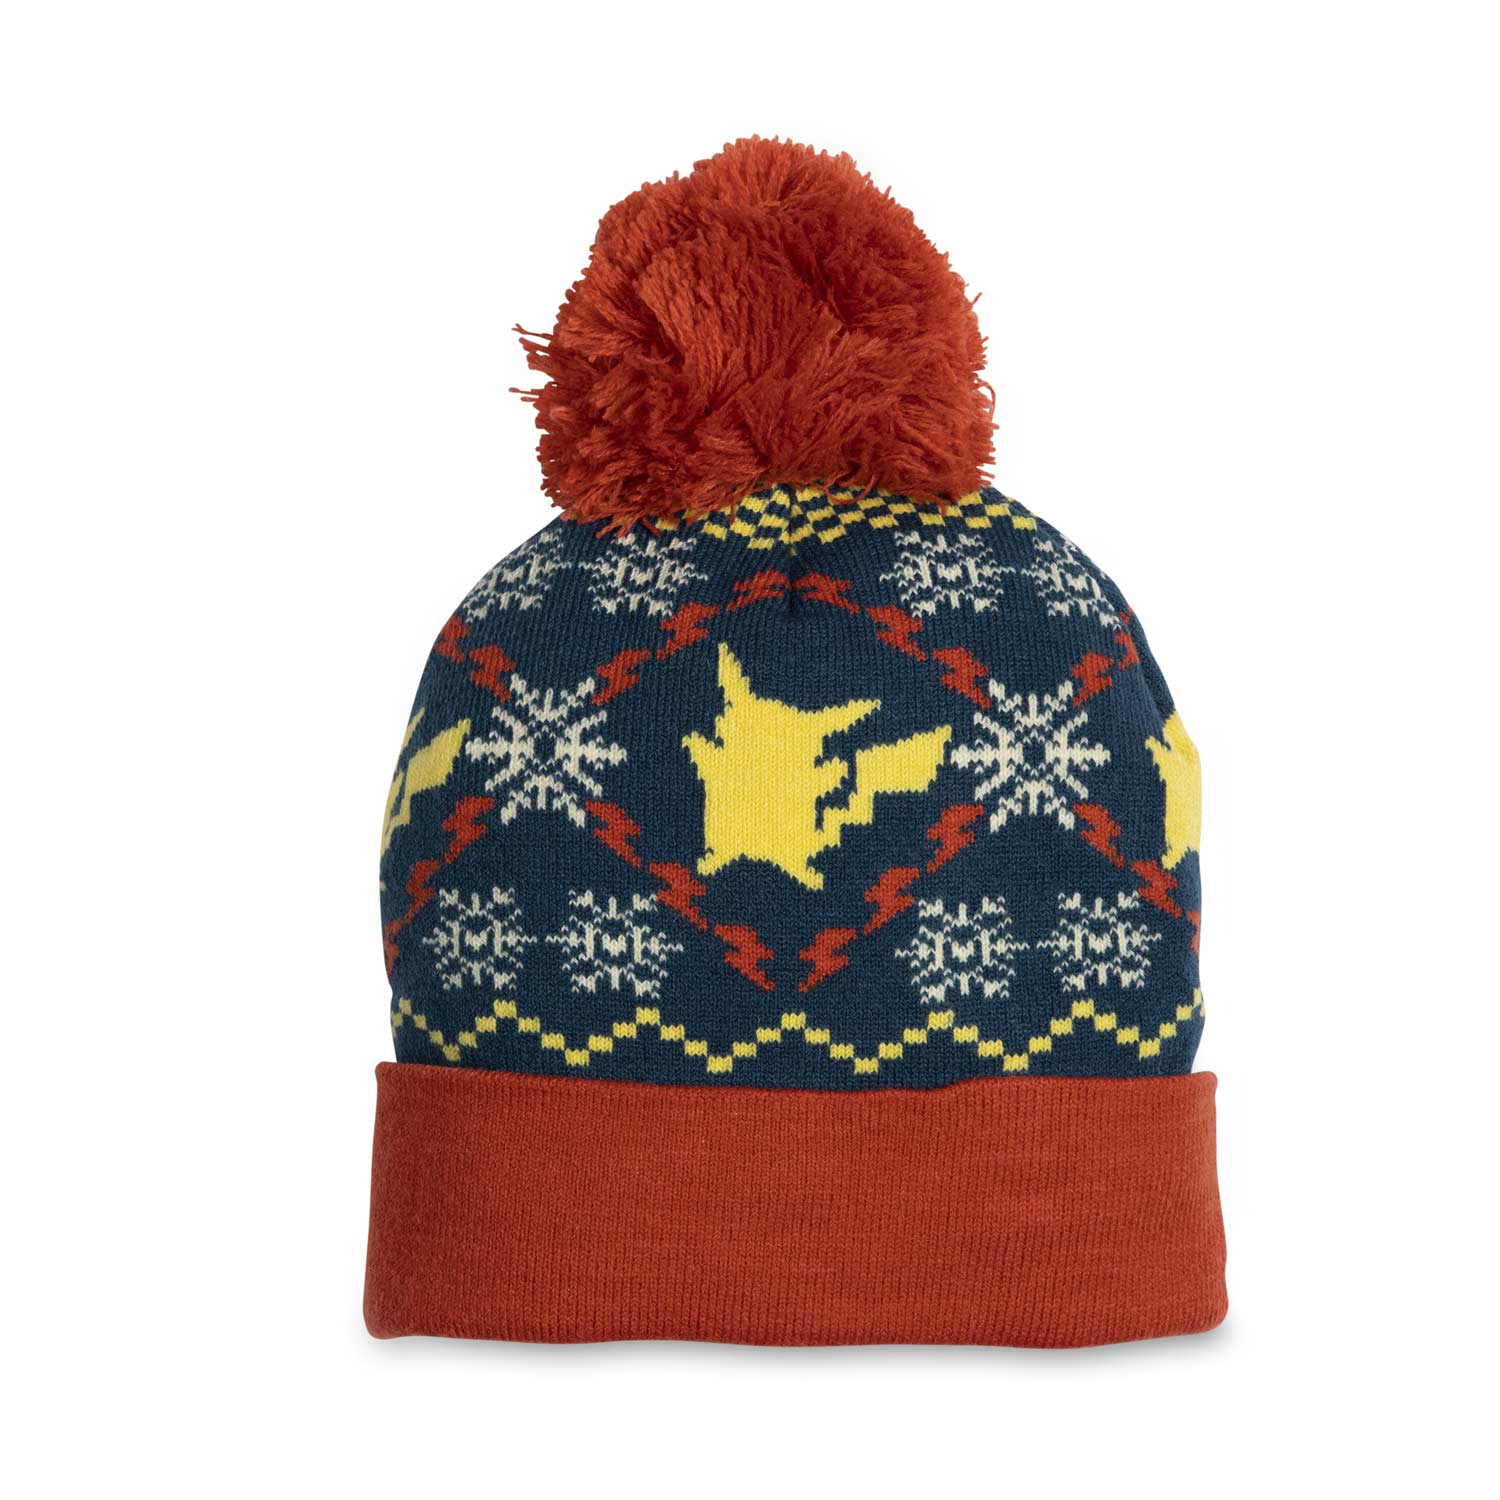 Adults Pokemon Pikachu Winter Beanie Toque Hat Costume Accessory